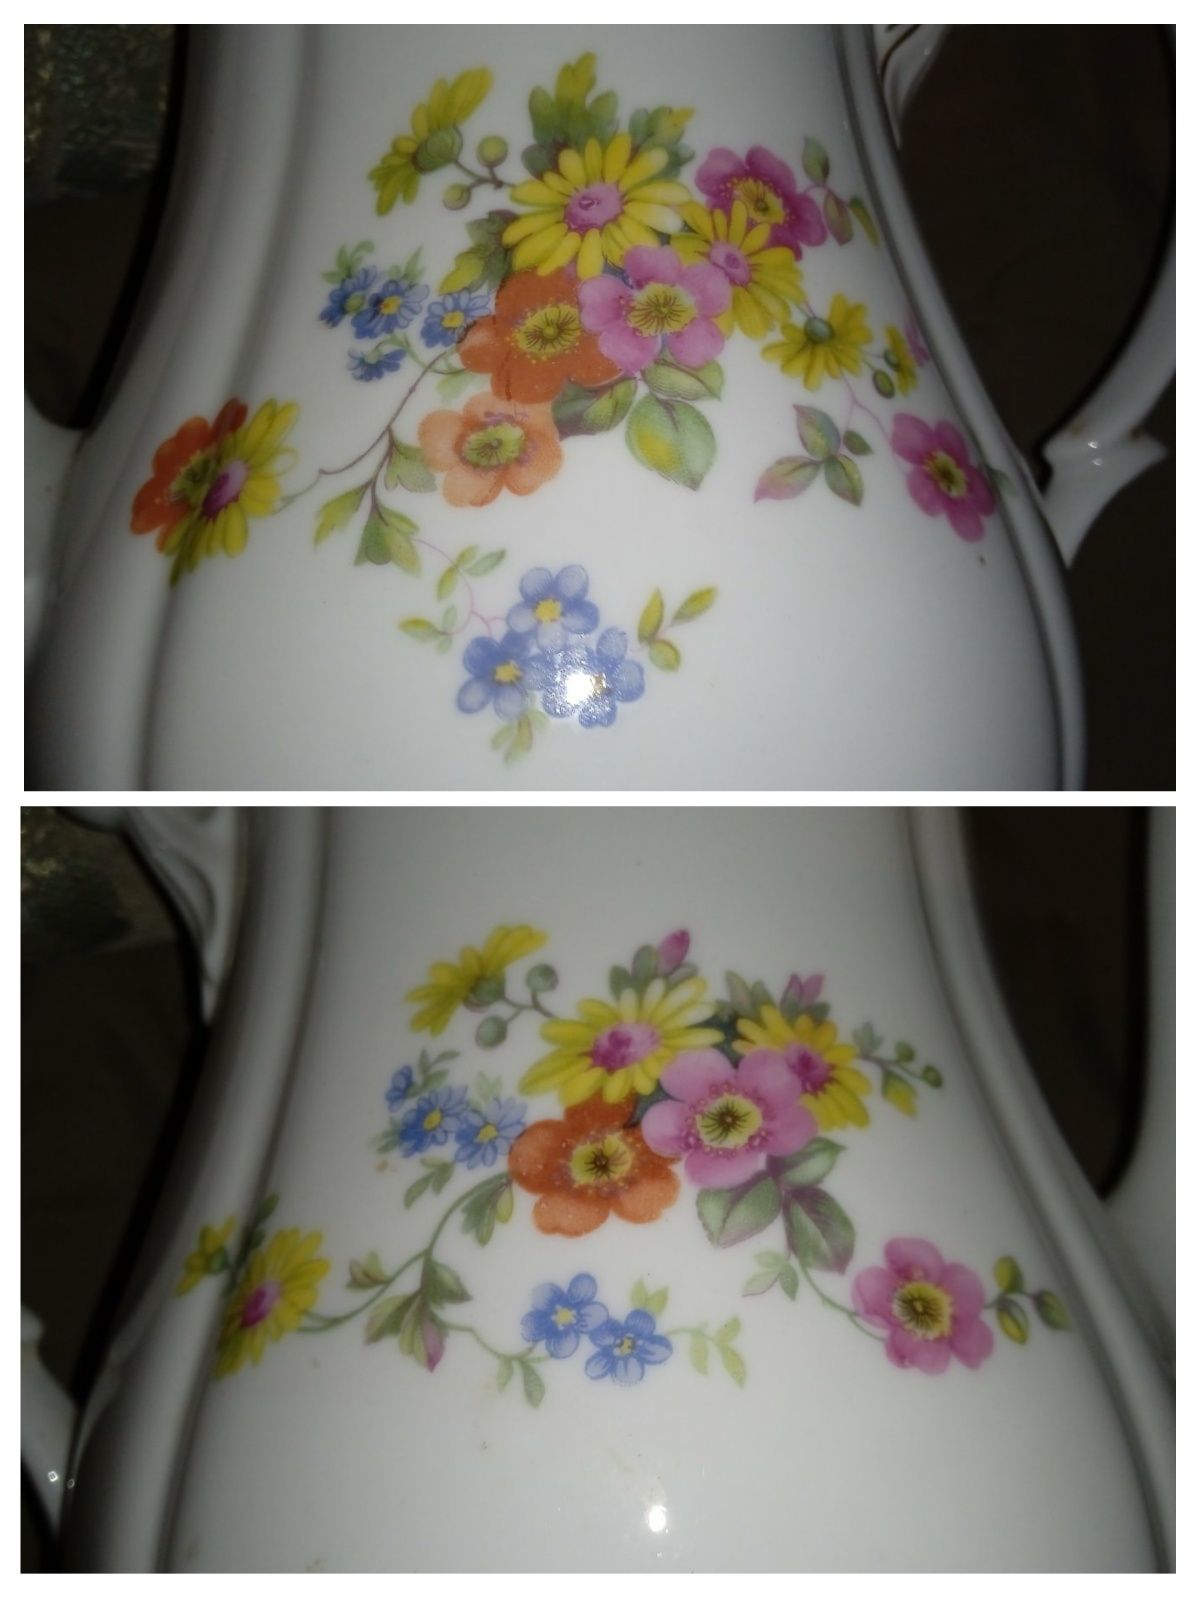 Чайник большой и молочник СССР набор с цветочками Juptin кувшин